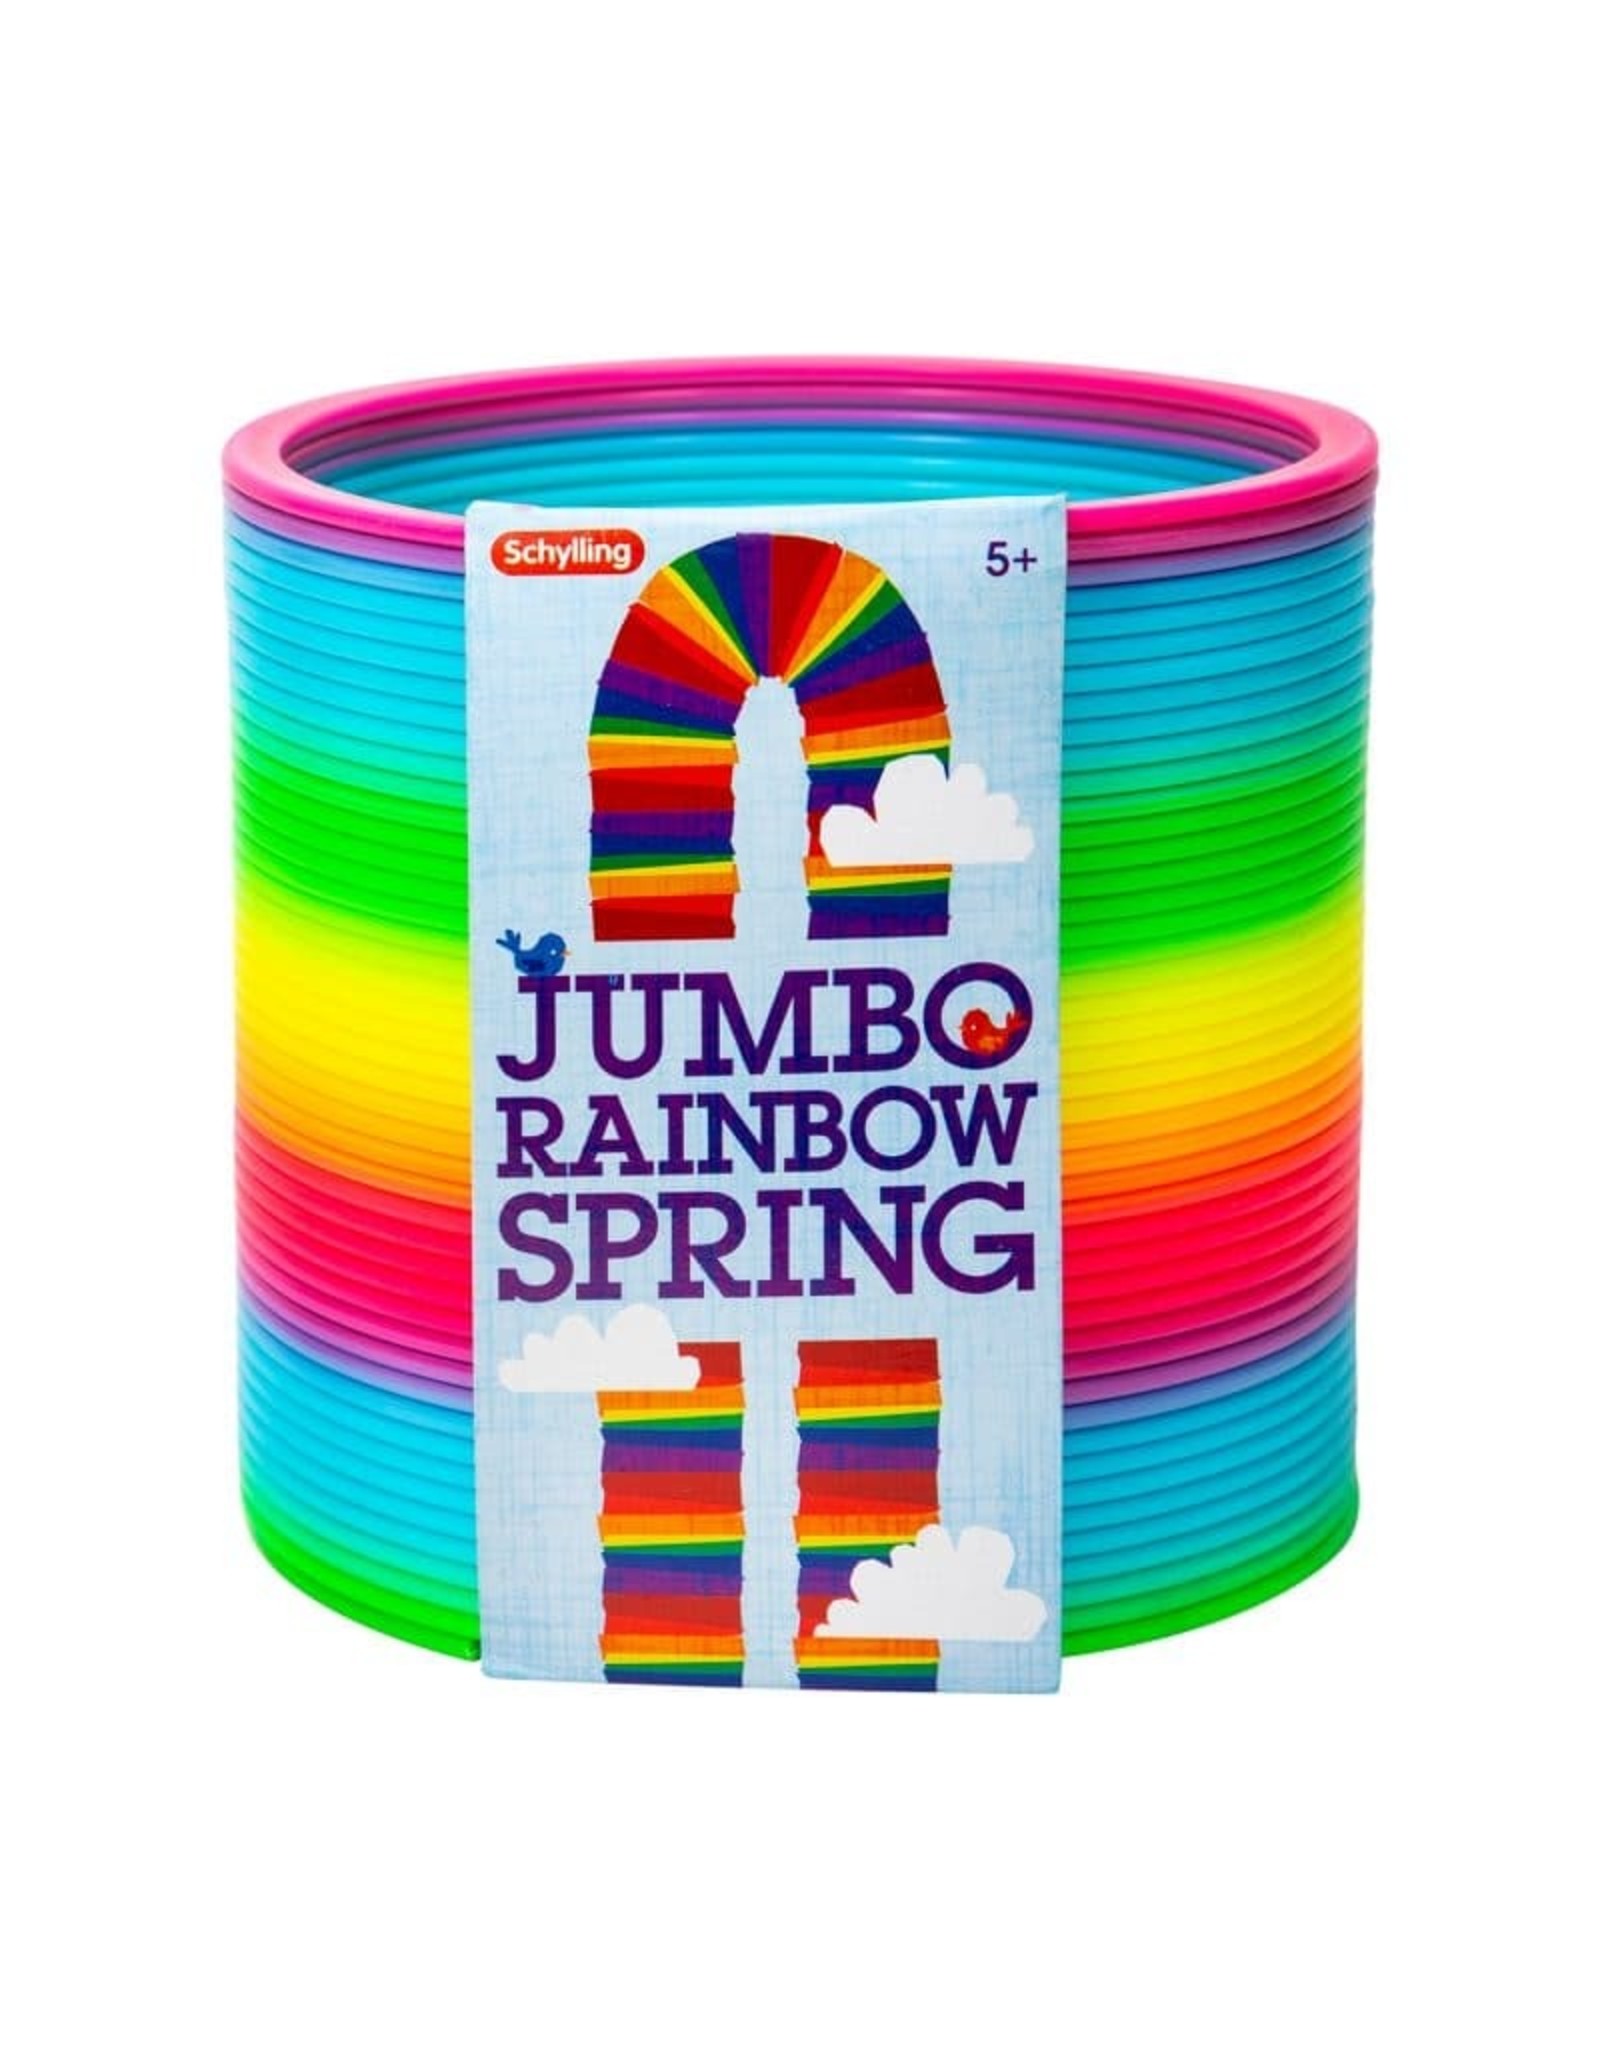 Schylling Jumbo Rainbow Spring